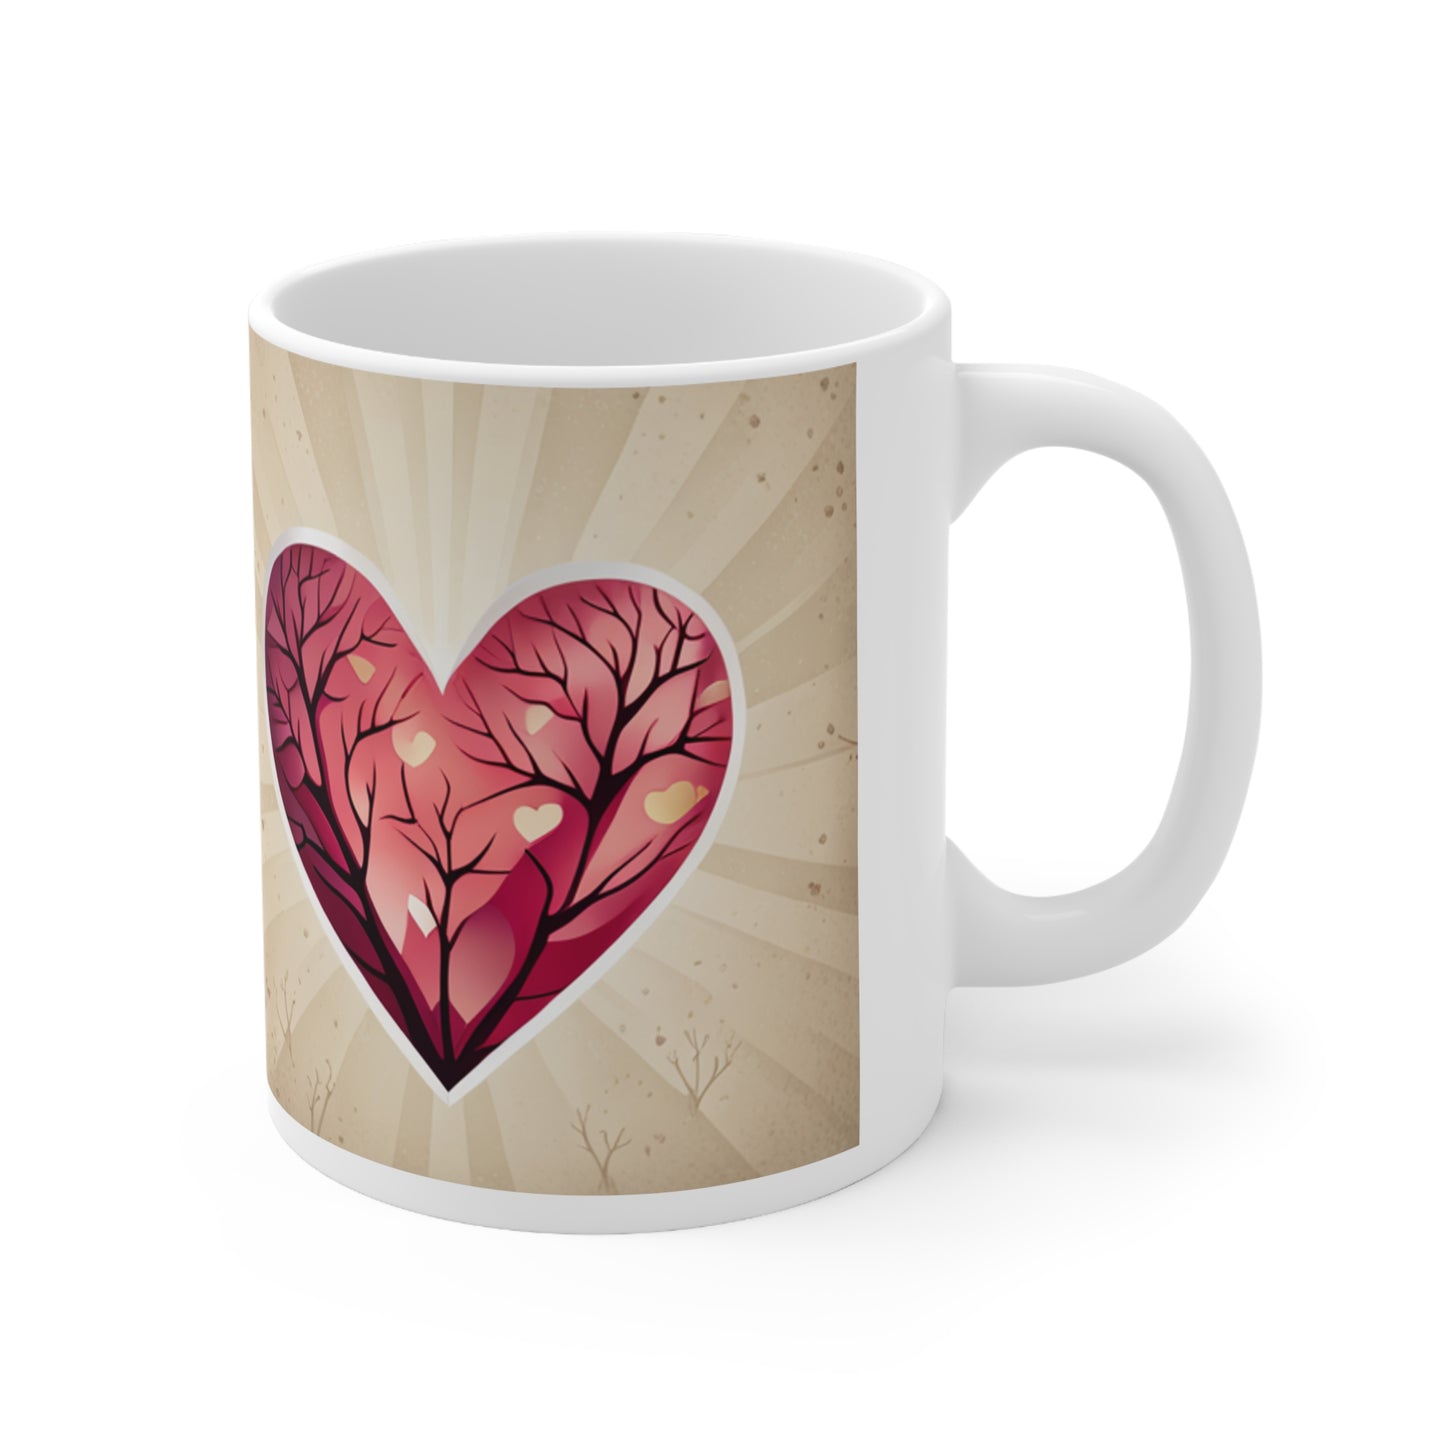 Coffee Mug - Heart Tree Ceramic Mug 11oz, Microwave and Dishwasher Safe